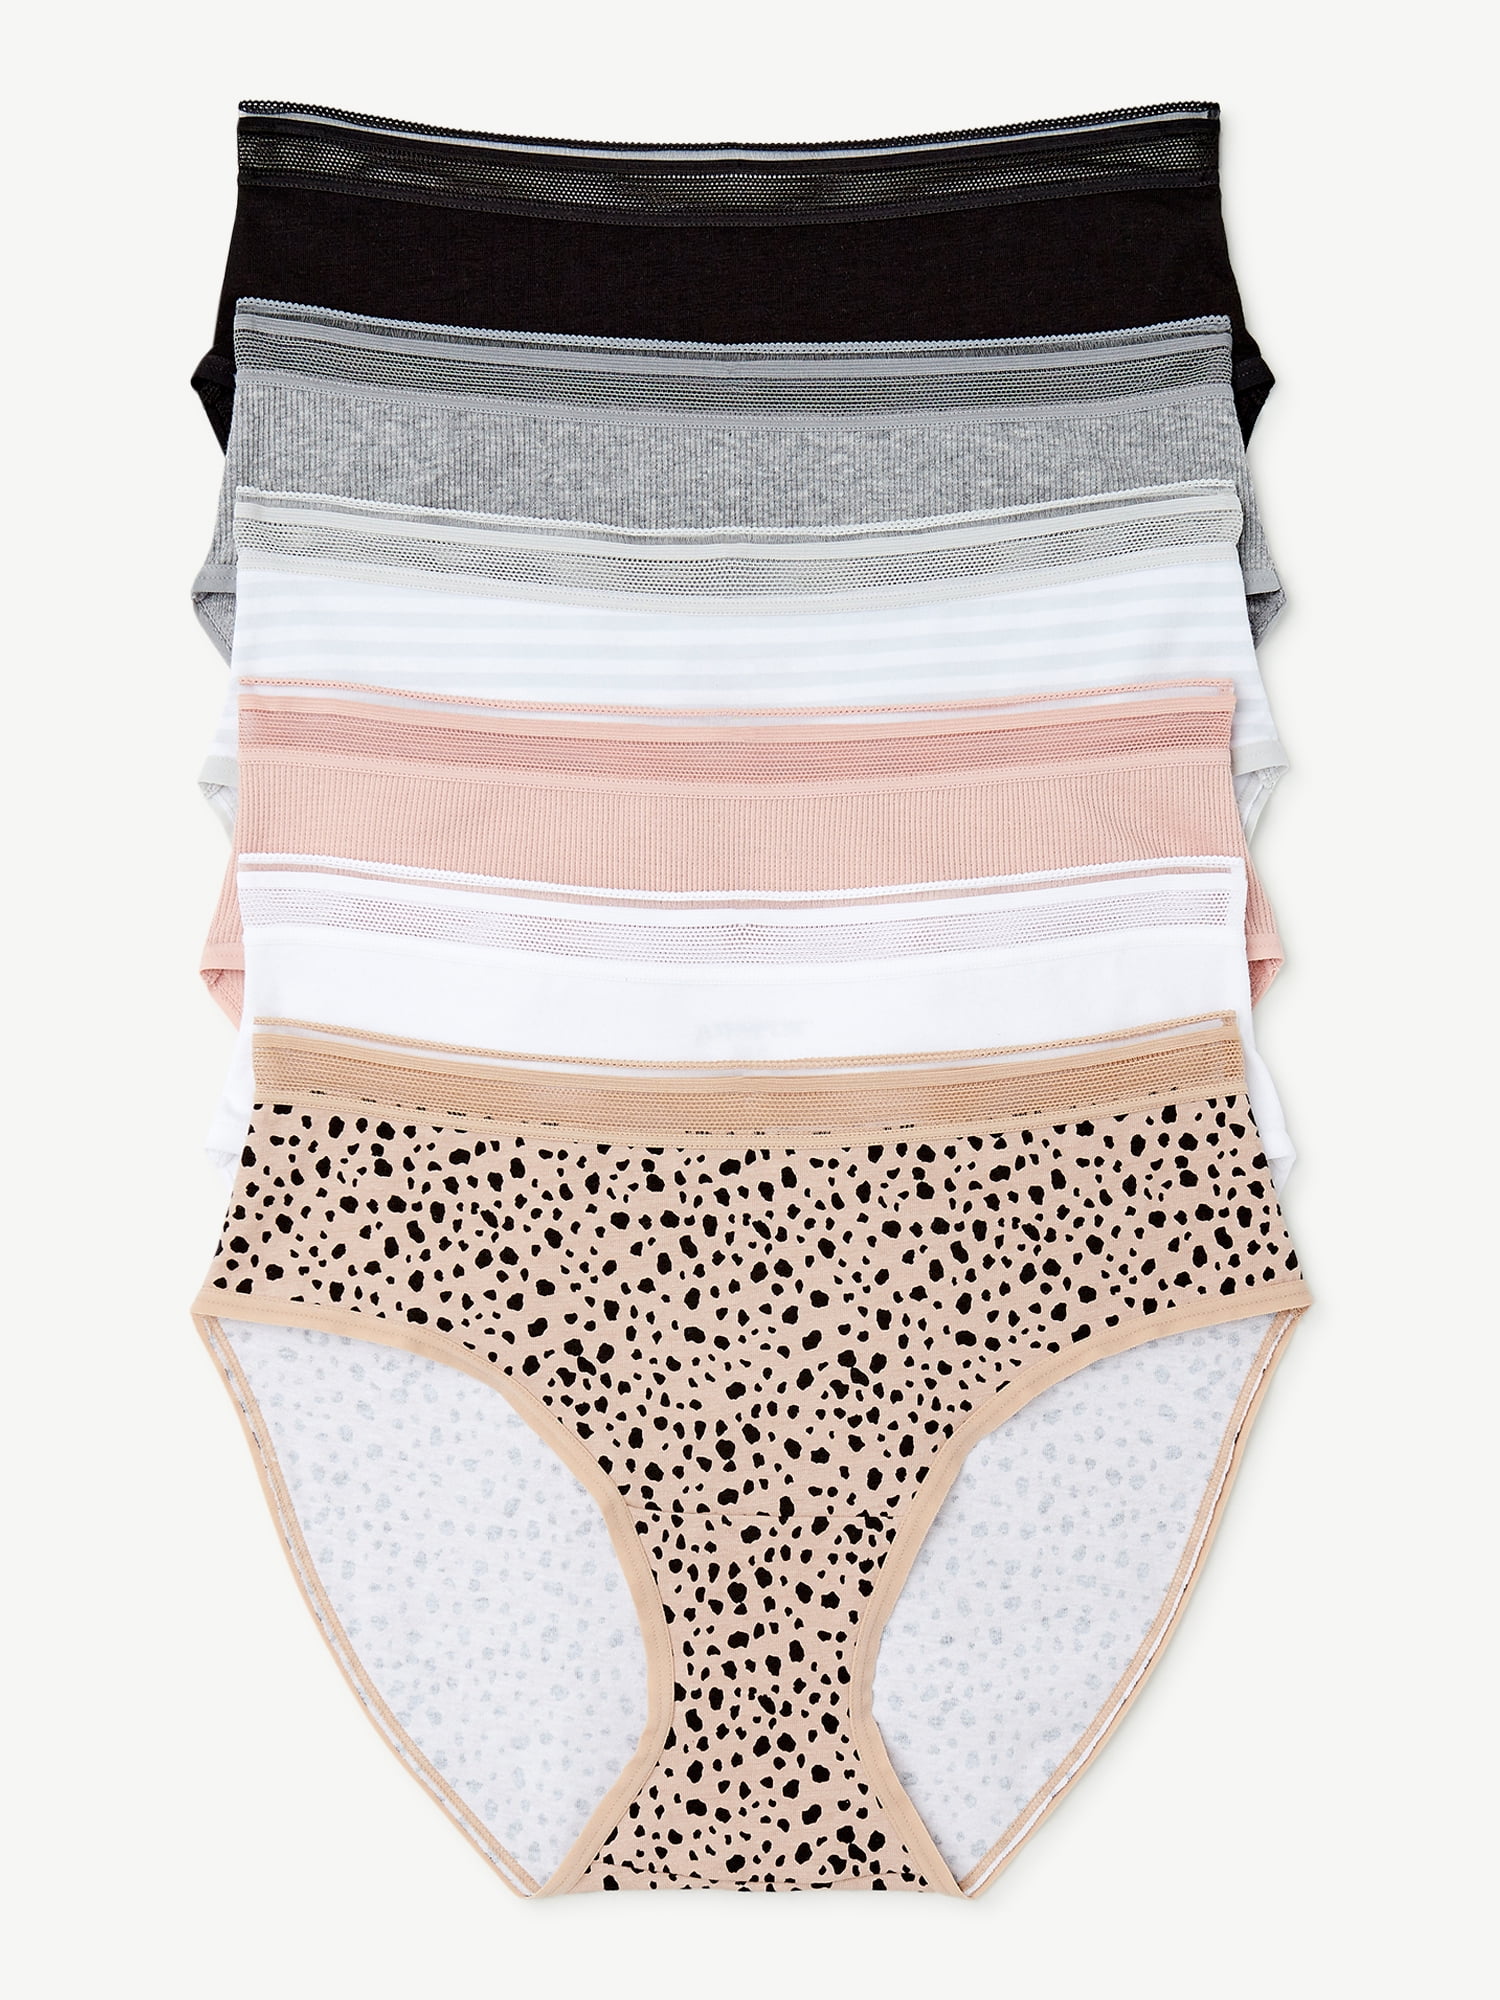 Lot 5-Pack Women Underwear Mid-Rise Soft Print Panties Regular& Plus Size  Briefs 